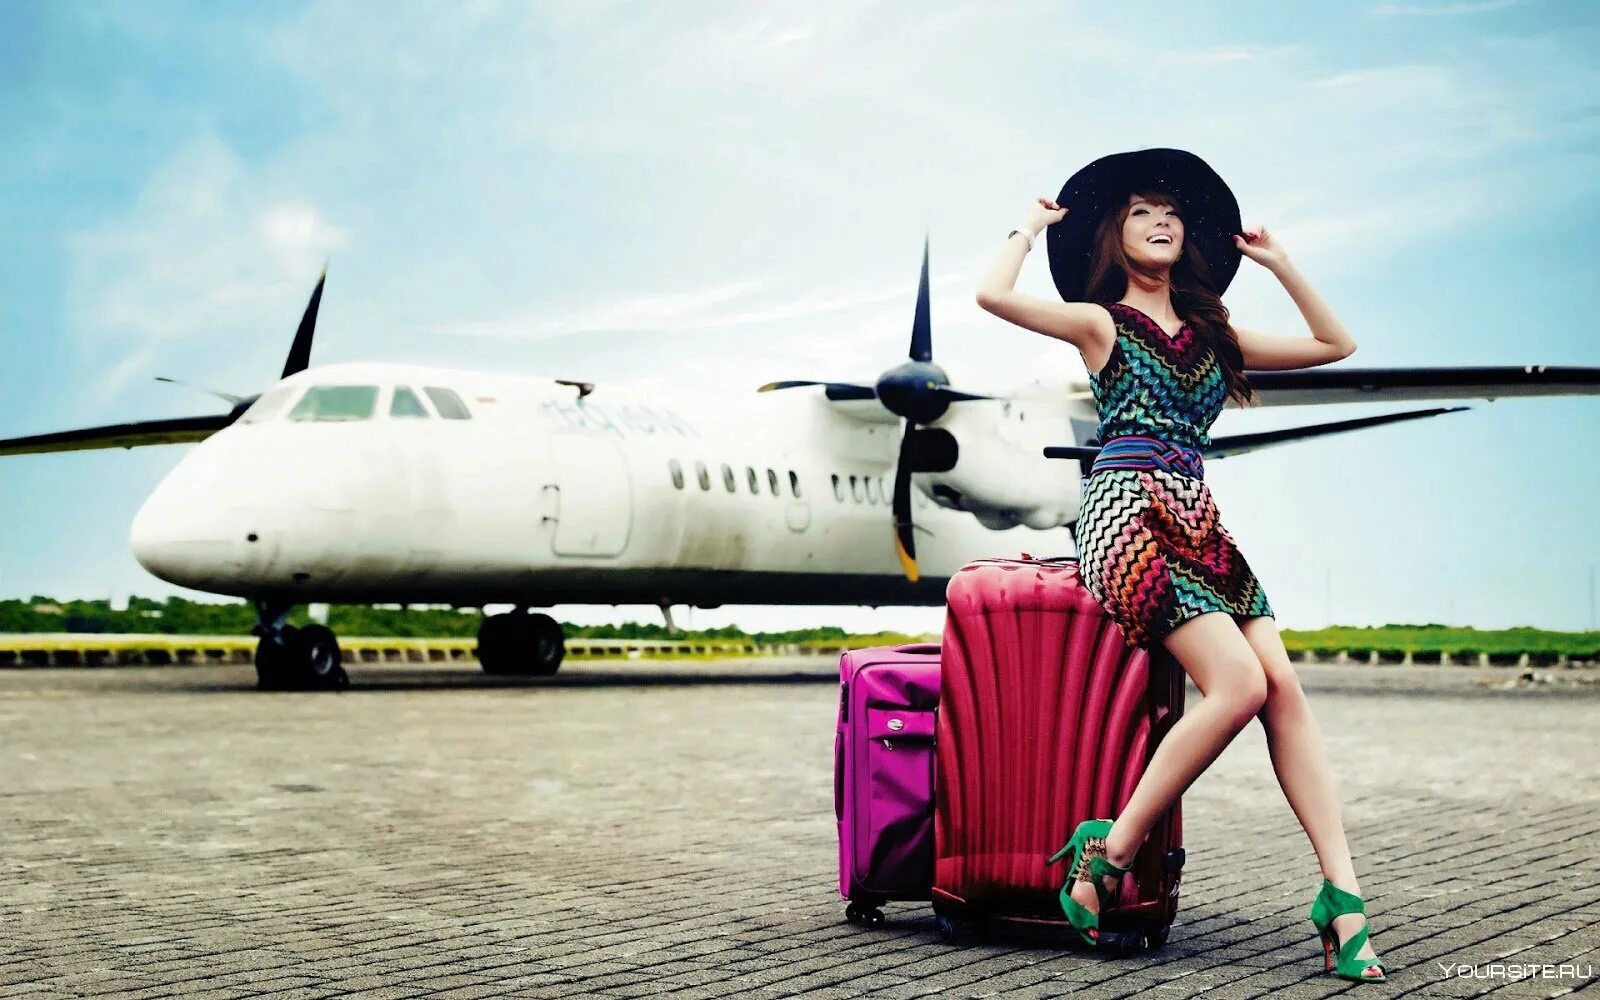 Девушка с чемоданом. Девушка путешественница. Девушка чемодан самолет. Фотосессия с самолетом. Самолет travel